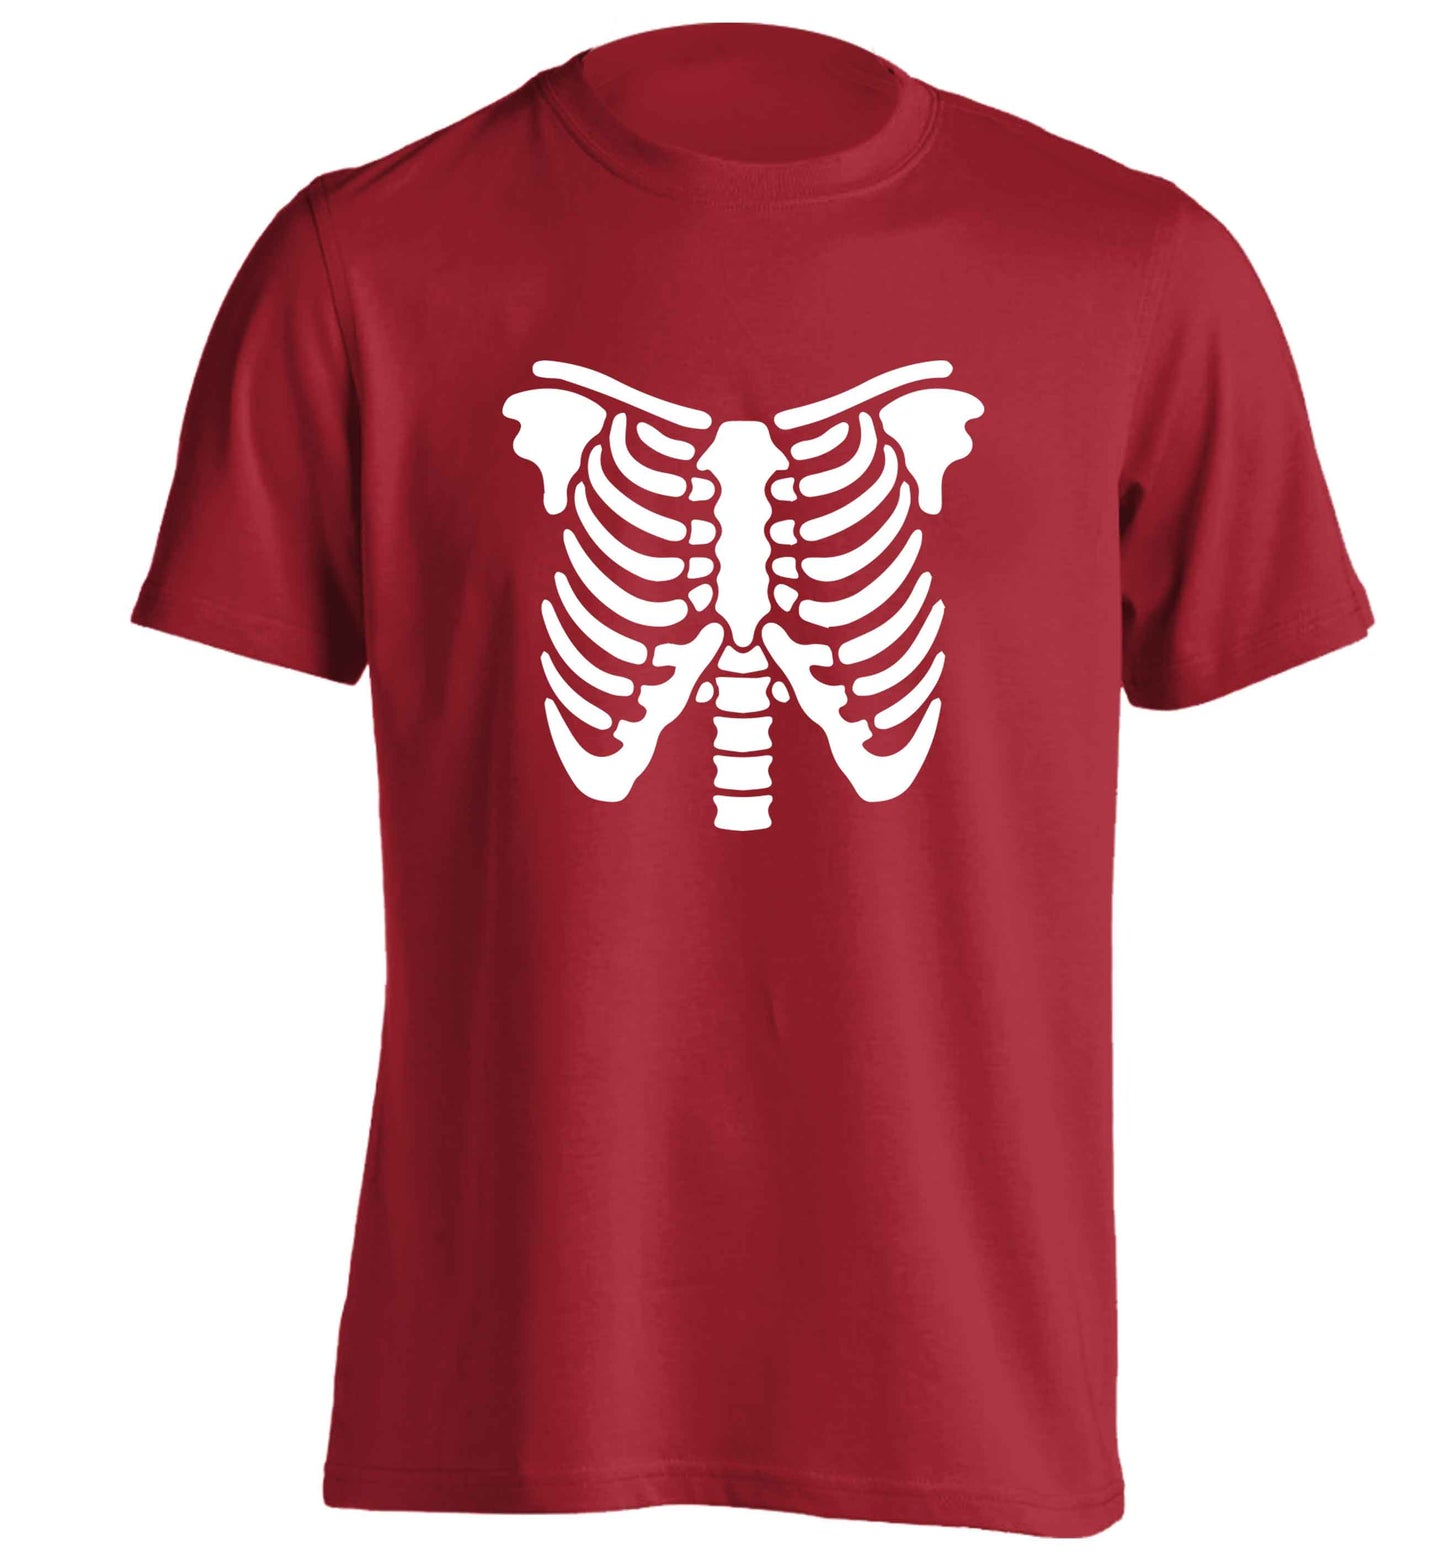 Skeleton ribcage adults unisex red Tshirt 2XL